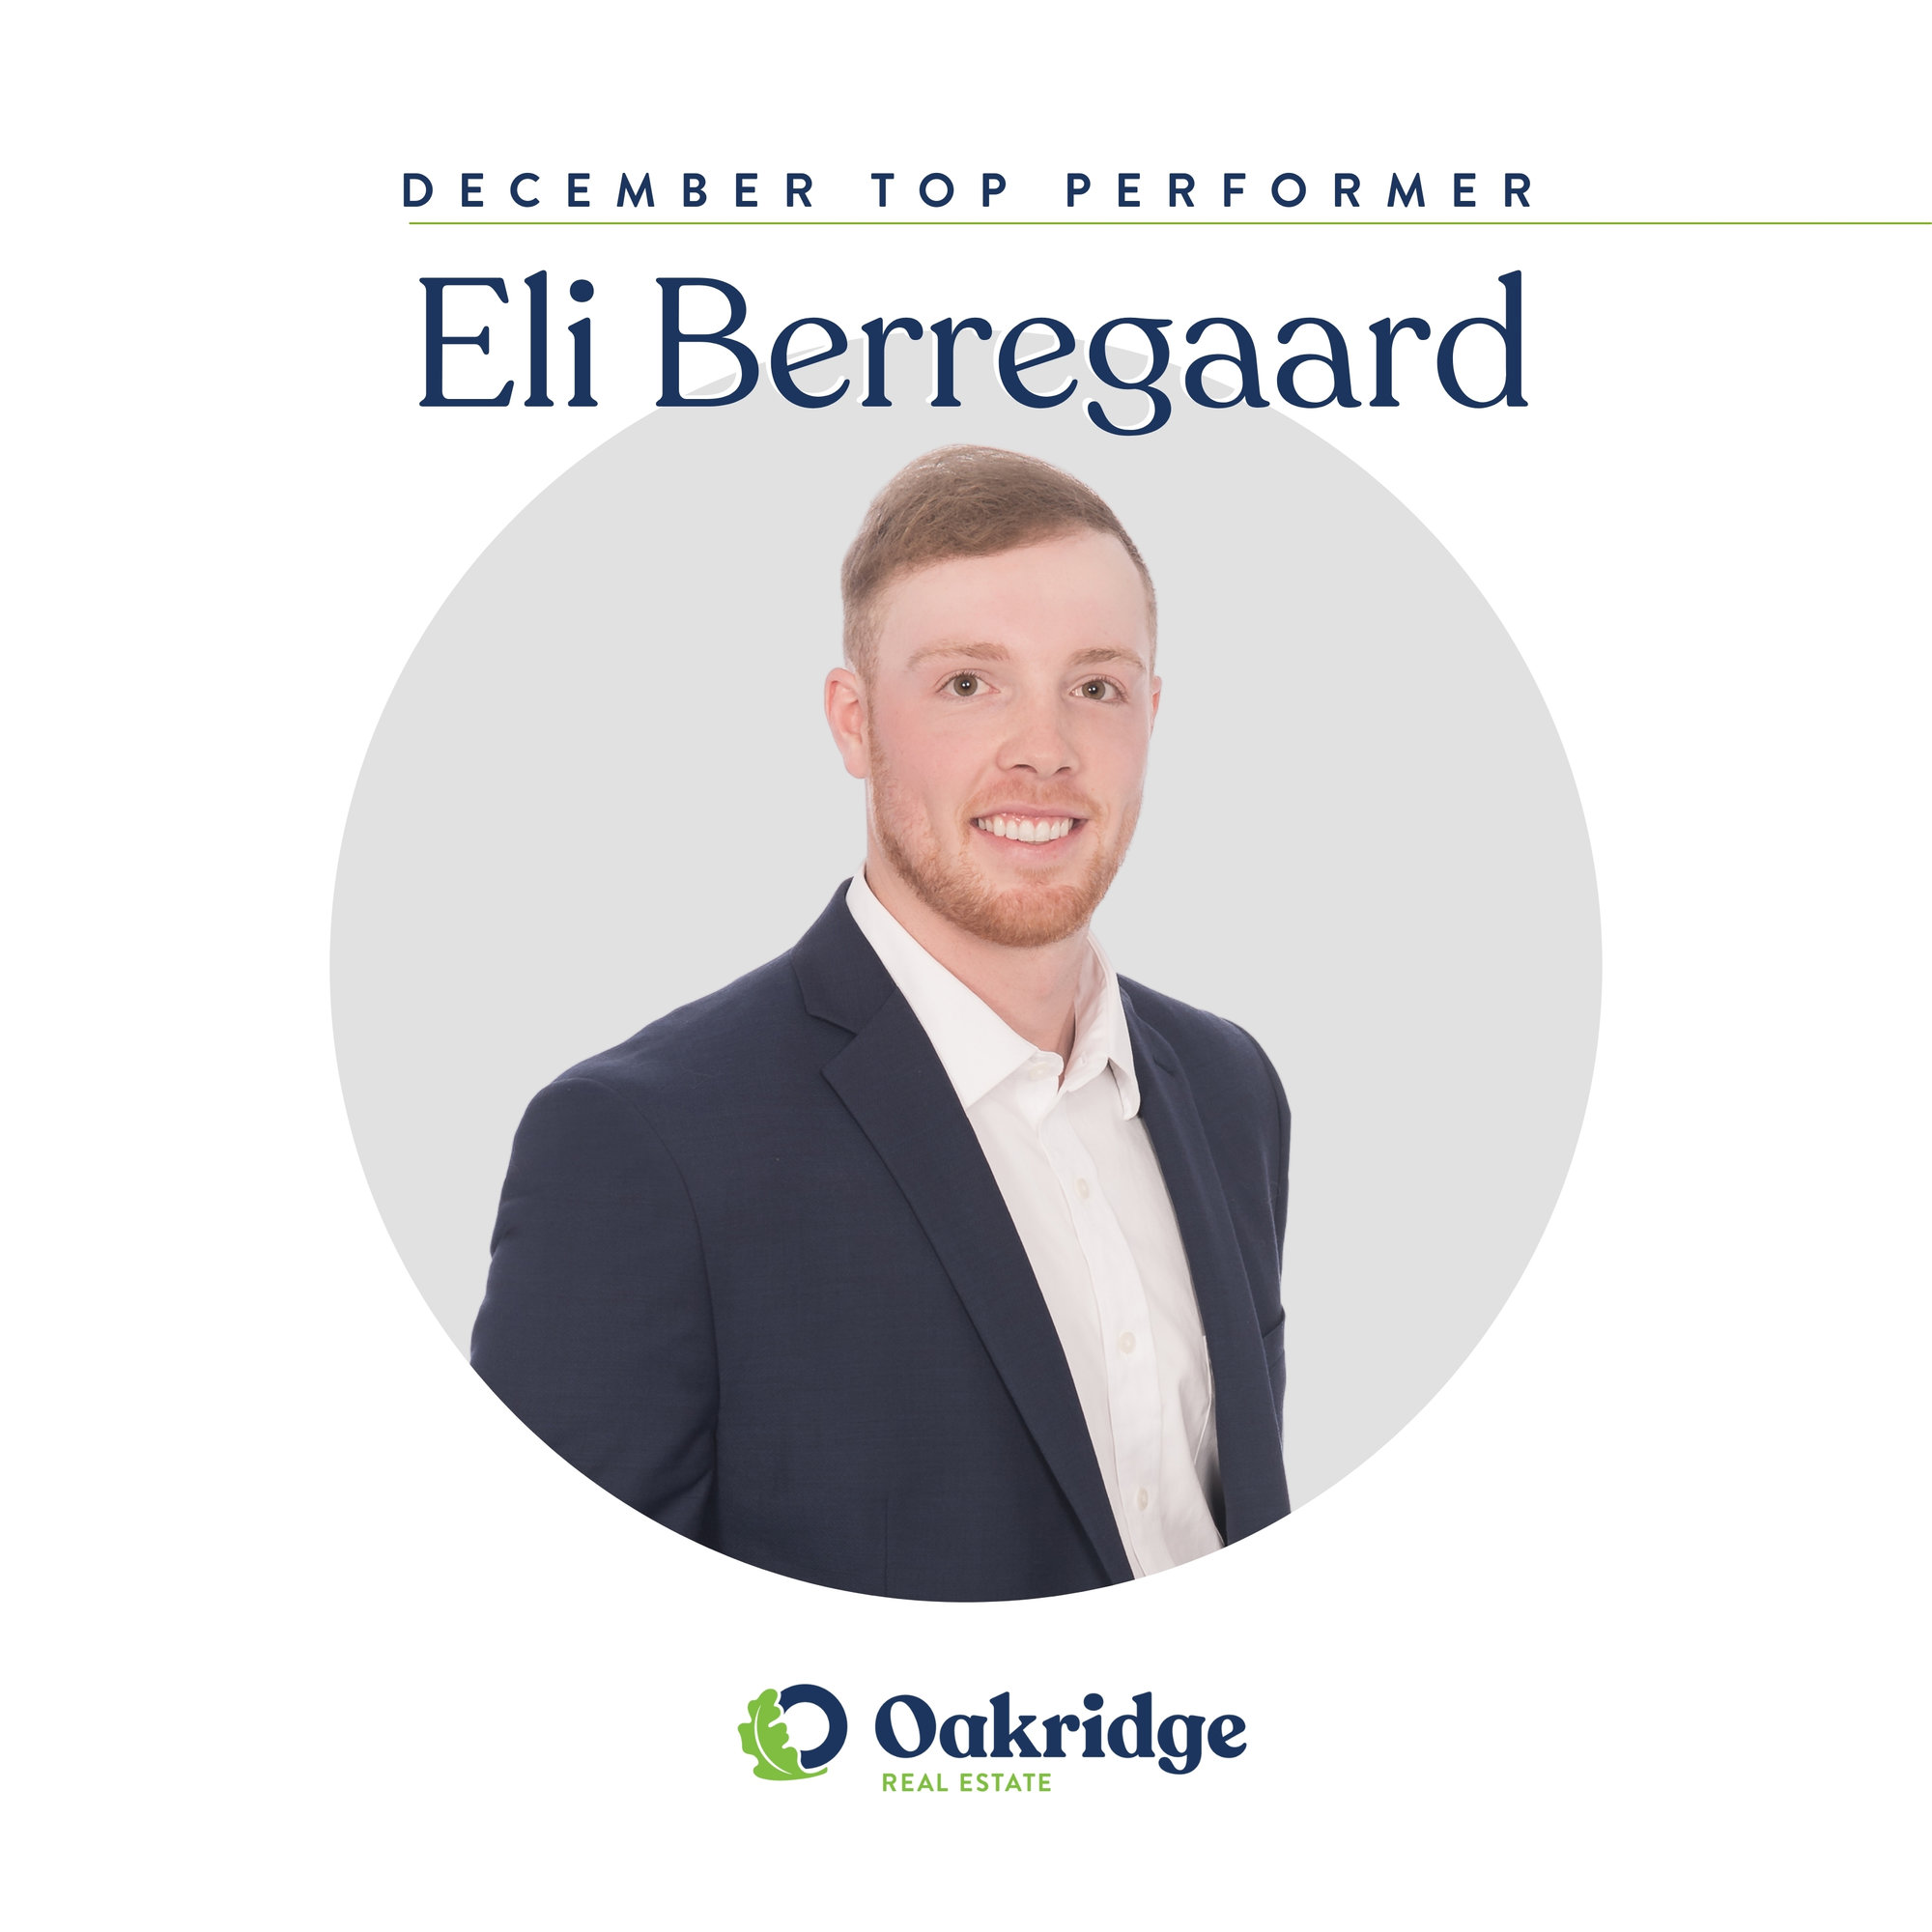 eli berregaard oakridge real estate december top performer 